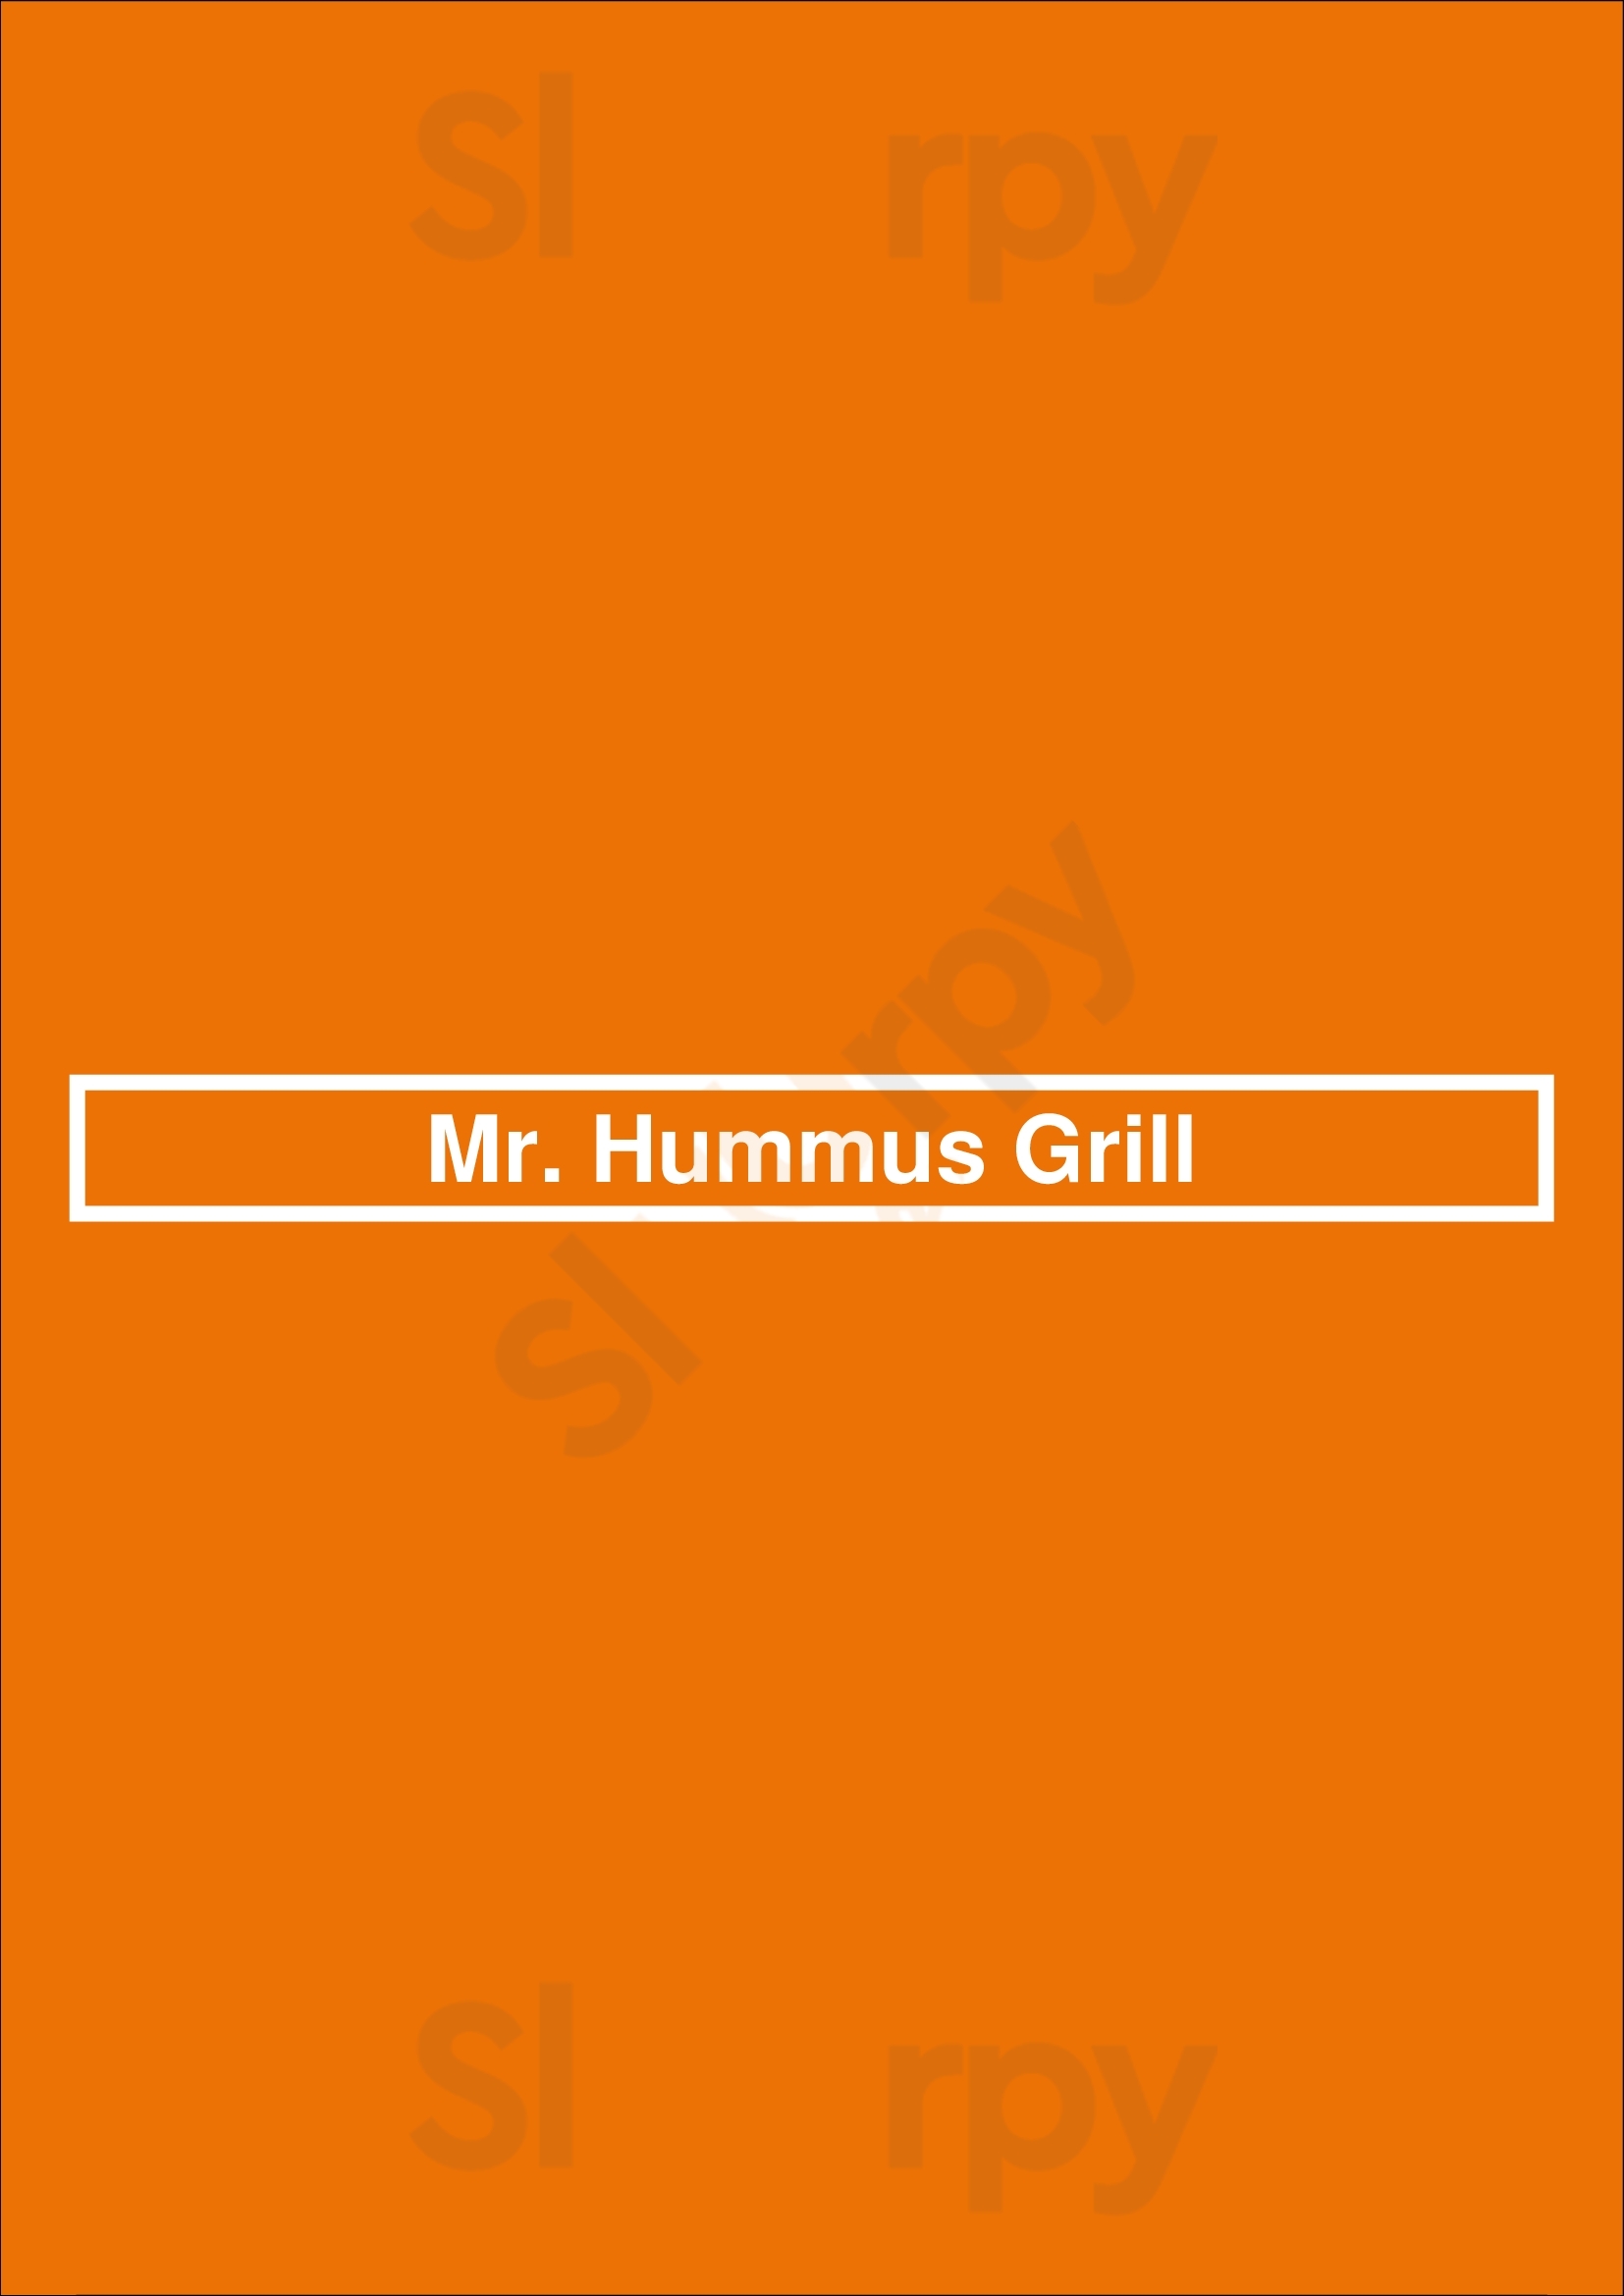 Mr. Hummus Grill Columbus Menu - 1